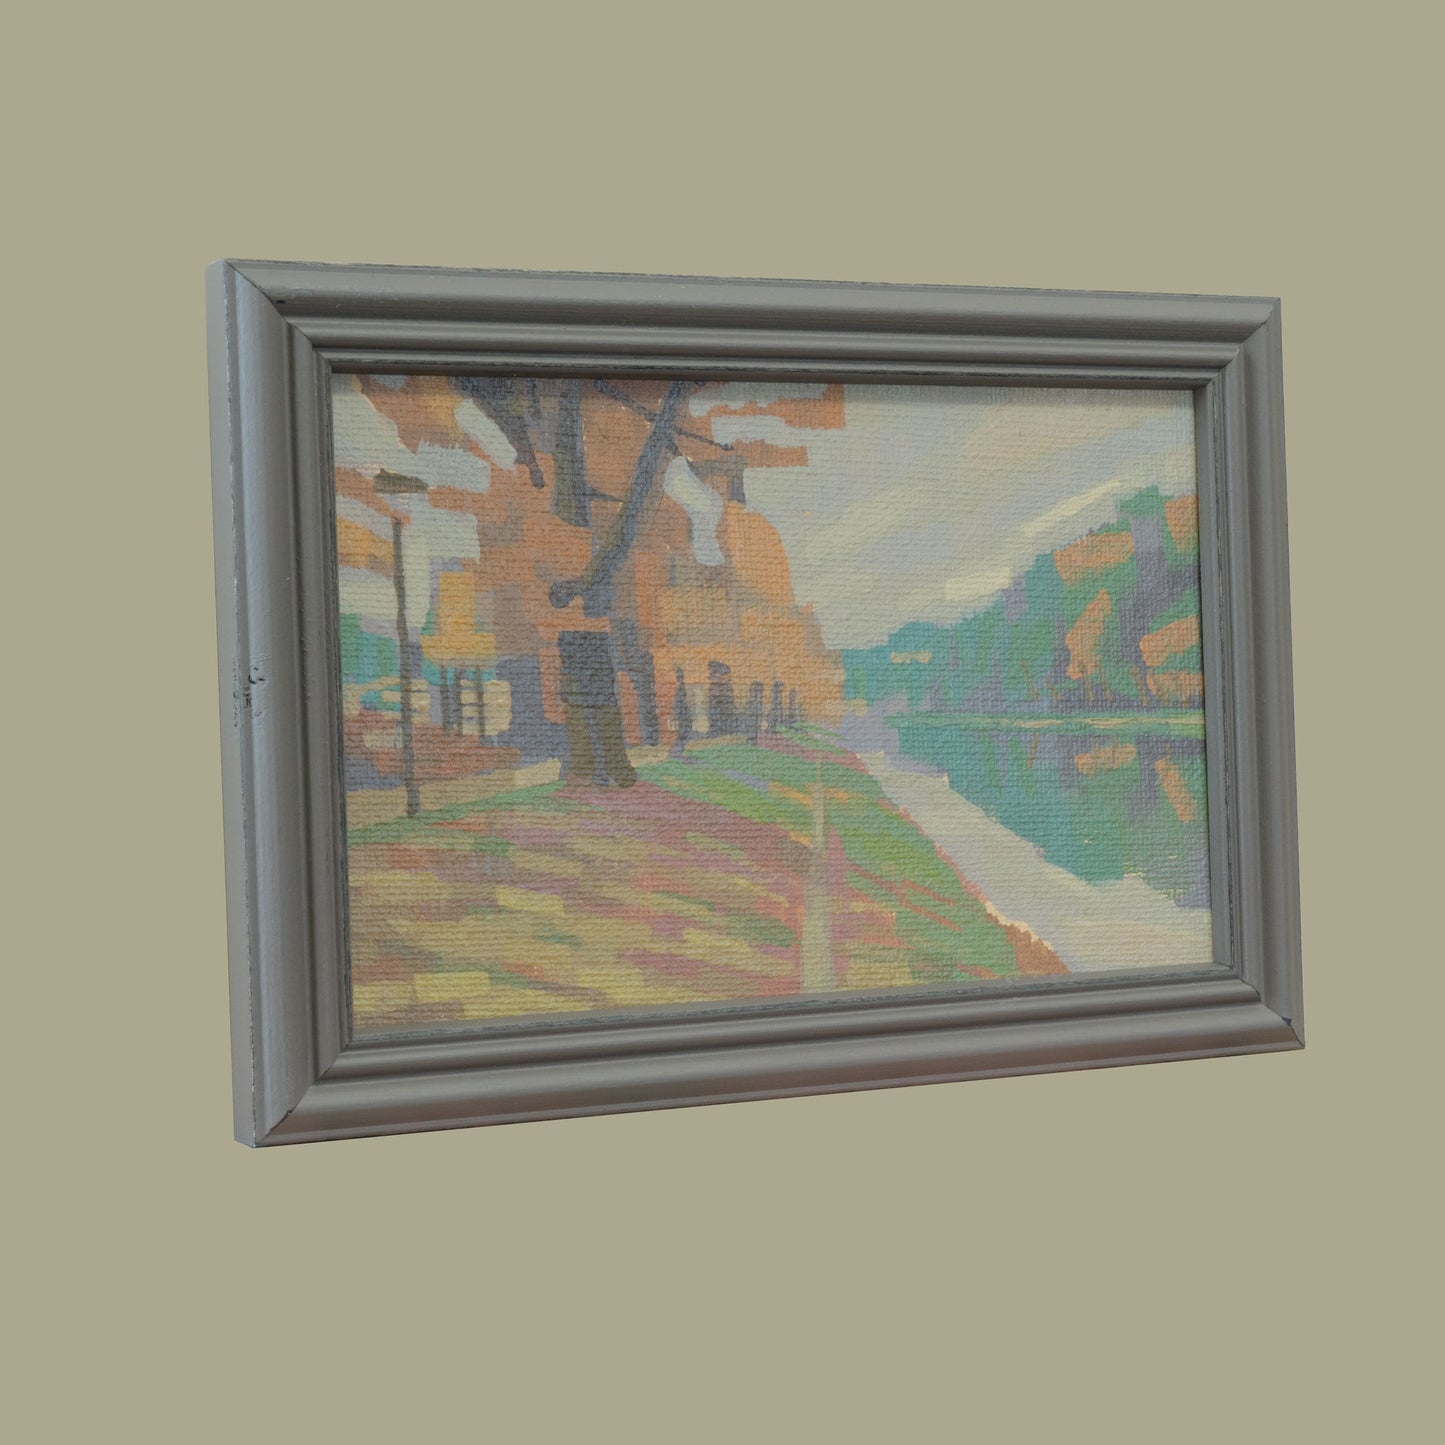 Original painting - "River Walk" - hand painted - acrylic painting - 10x15 cm - landscape picture - unique piece - with frame